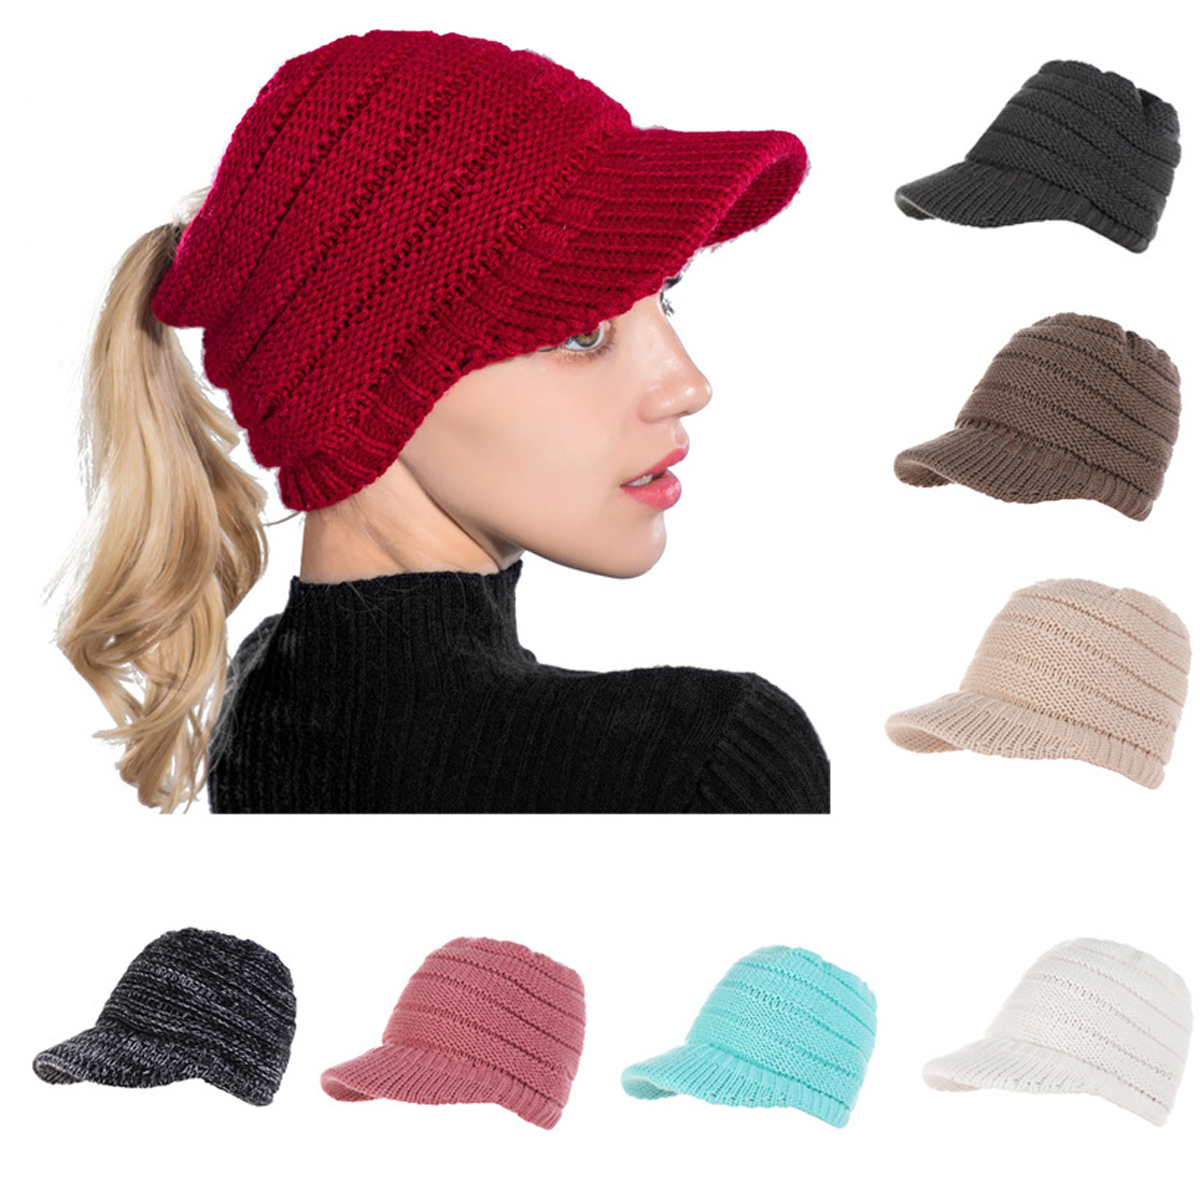 Ladies Knitted Hat Patterns Details About Hot Women Lady Ponytail Brim Cap Winter Warm Baggy Beanie Knit Hat Cotton Blend